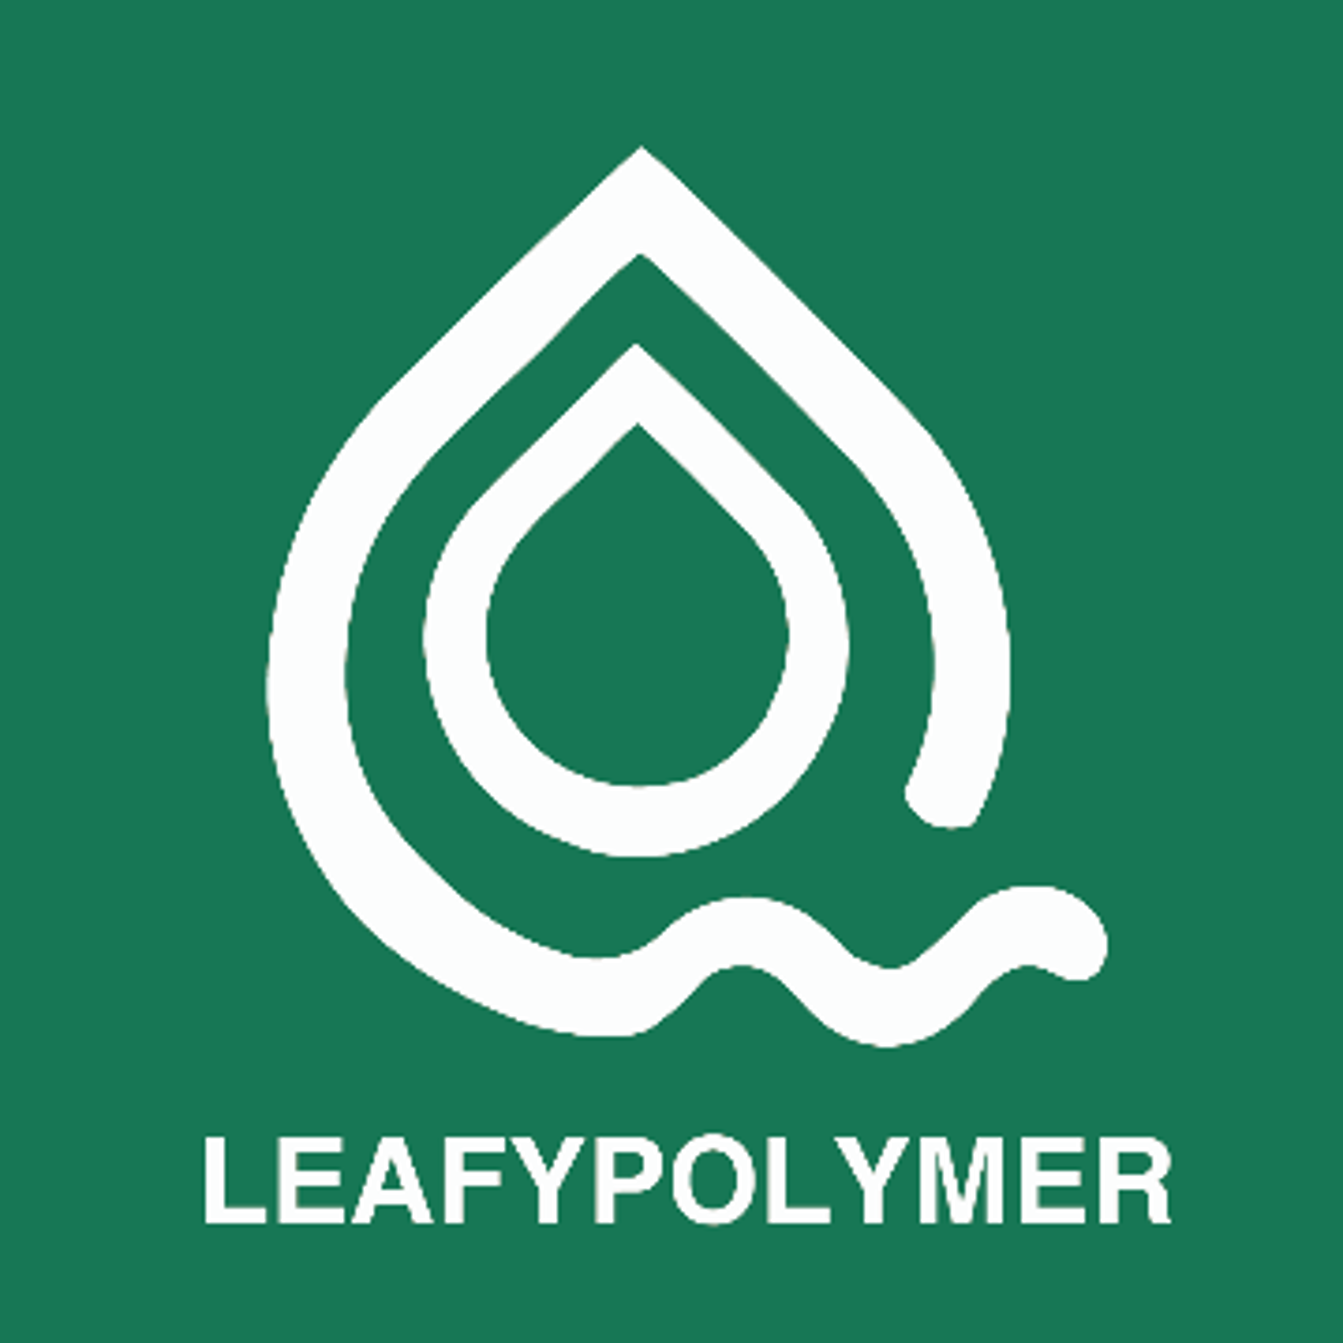 Leafpolymer